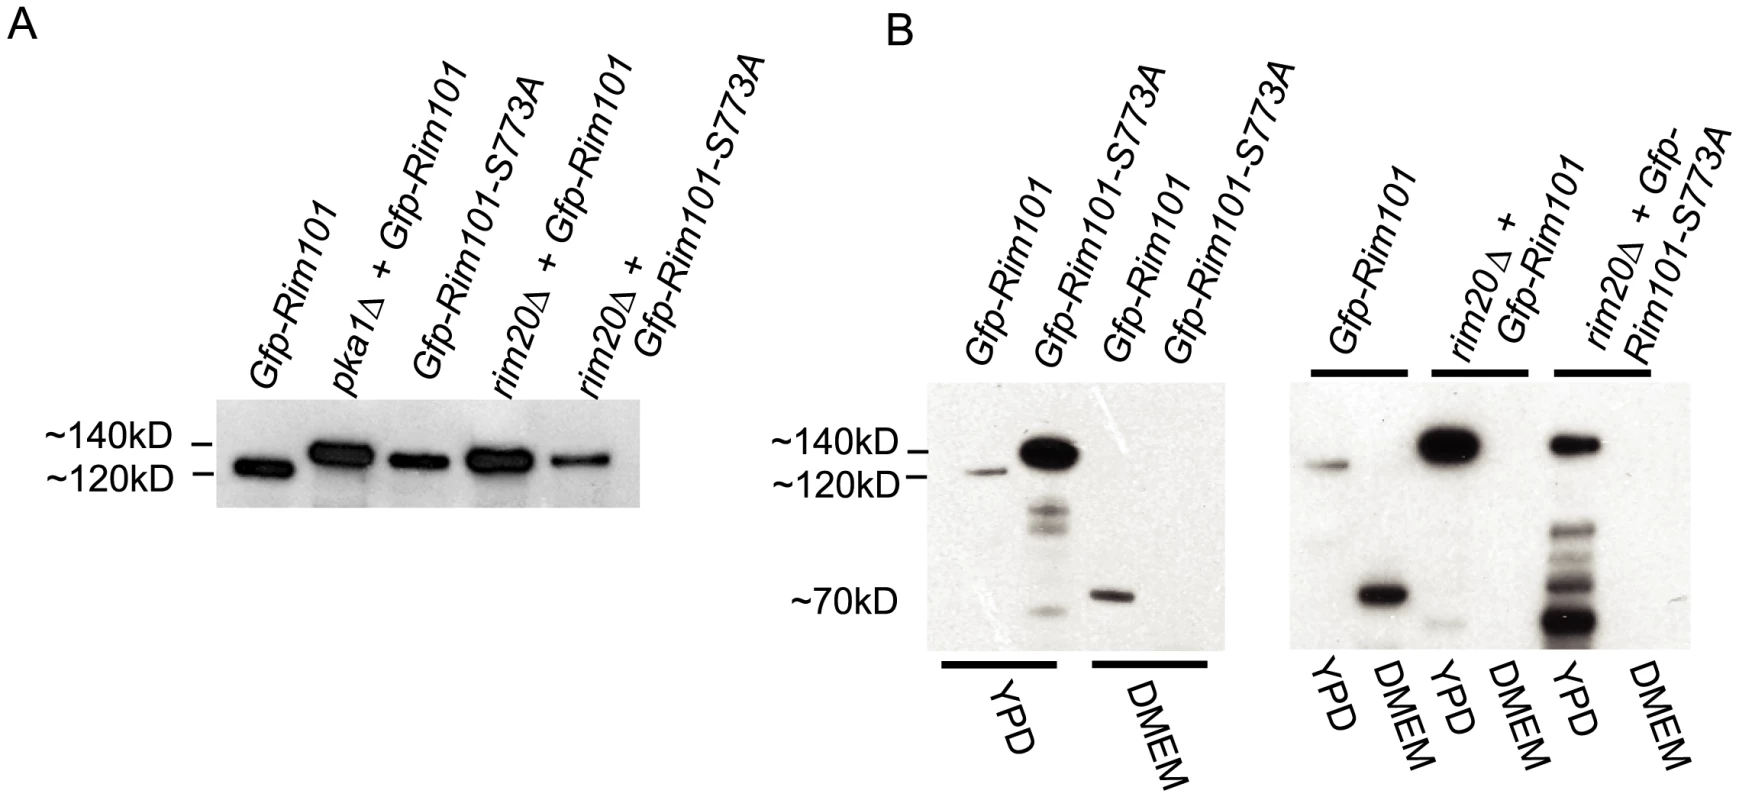 Western blot analysis of Rim101 in <i>rim101</i> and <i>pka1Δ </i><i>mutant</i> backgrounds.